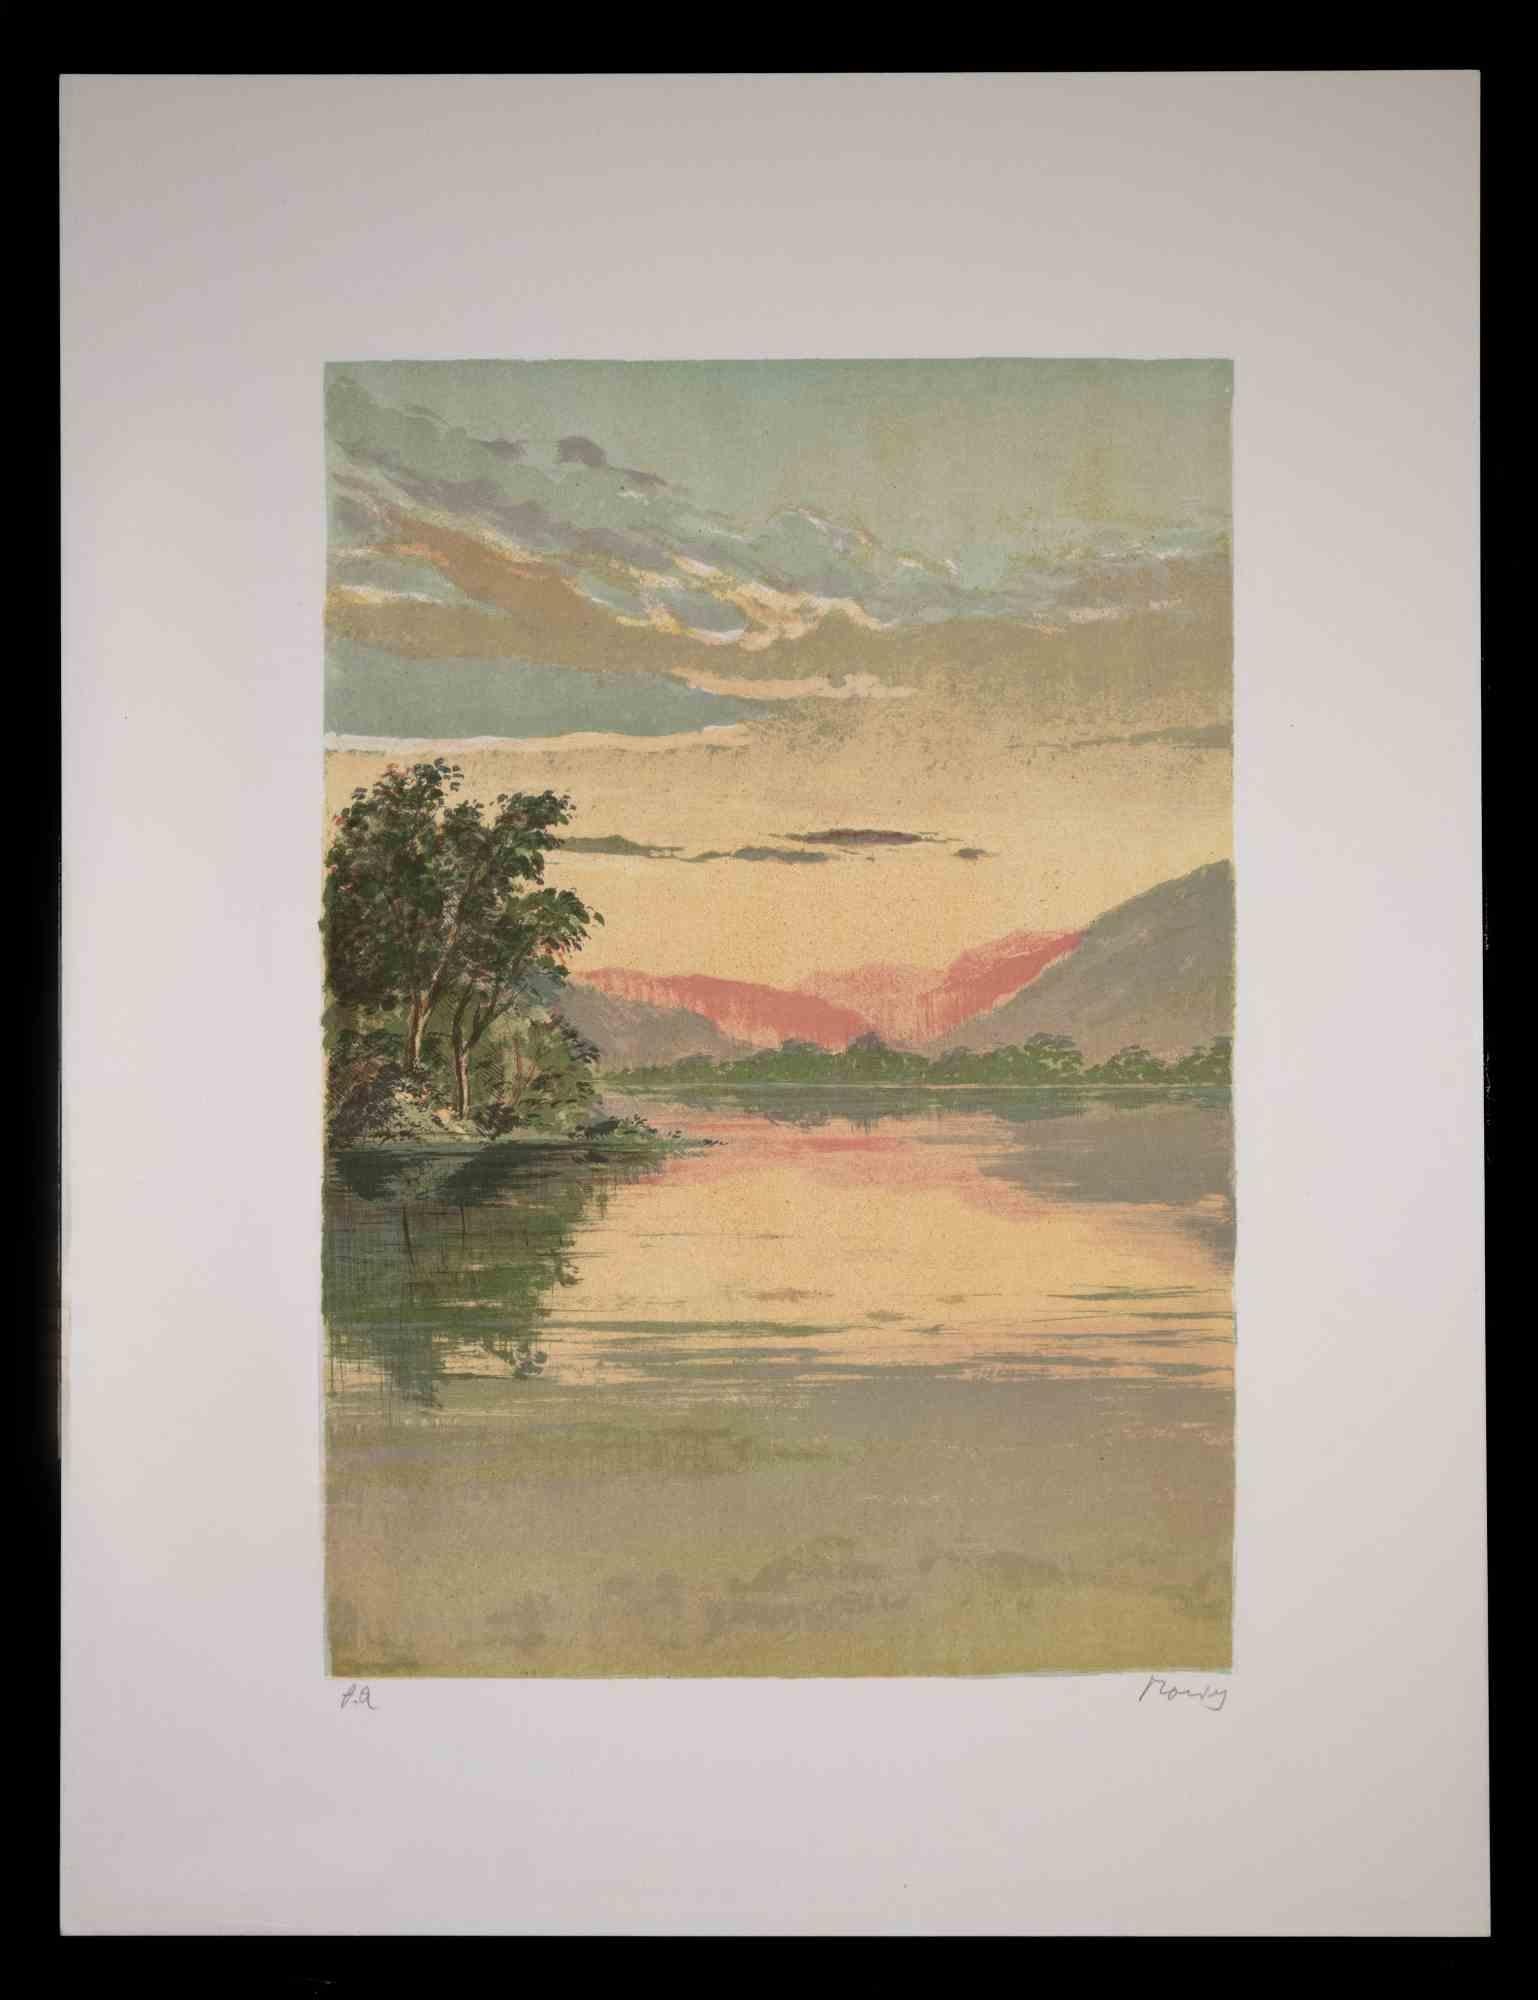 Sunrise on the Lake - Original Lithograph by Mario Sportelli - 1970s